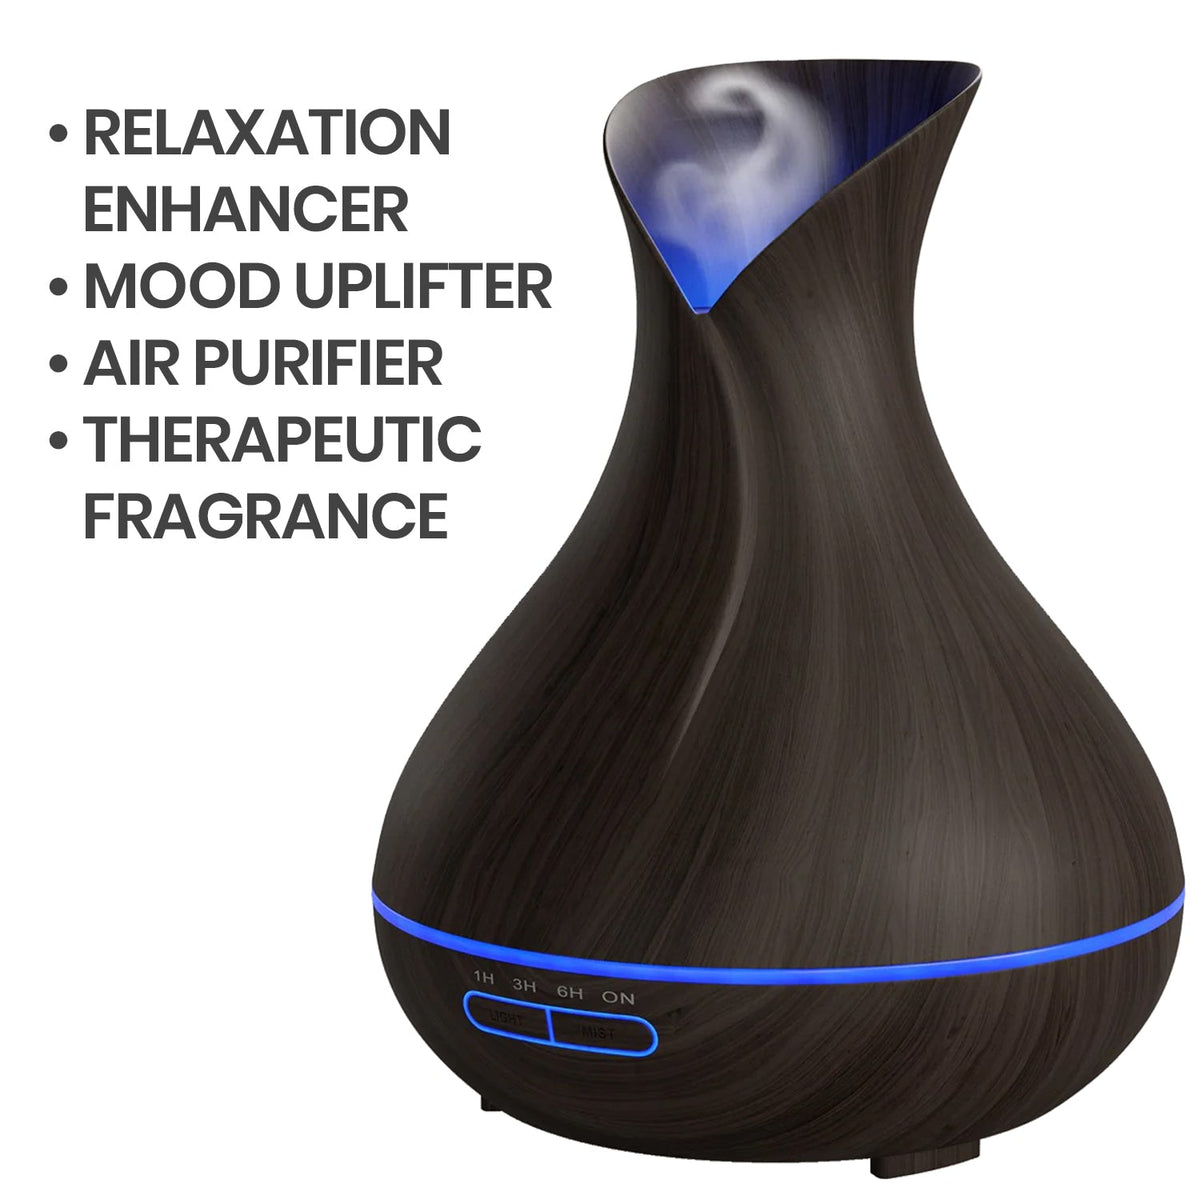 Aromatherapy Diffuser